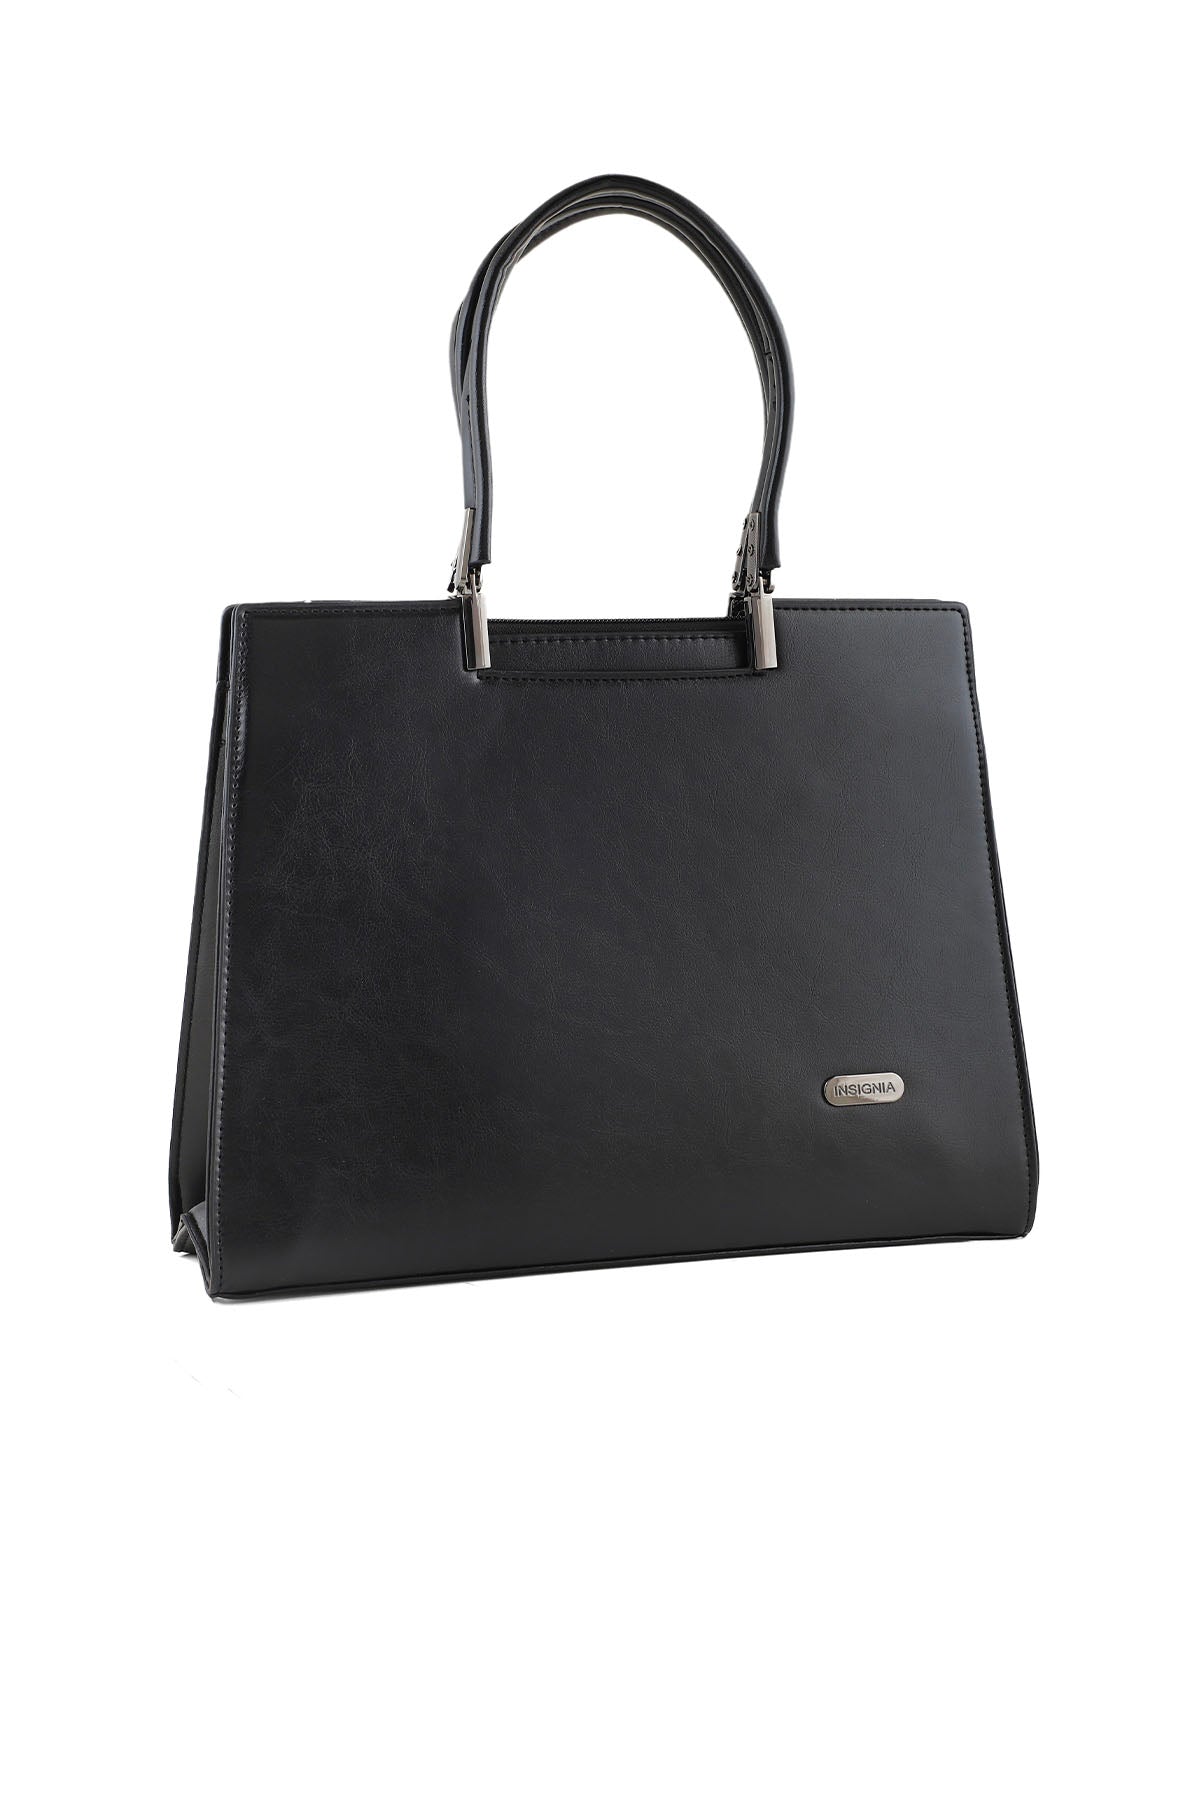 Formal Tote Hand Bags B14967-Black